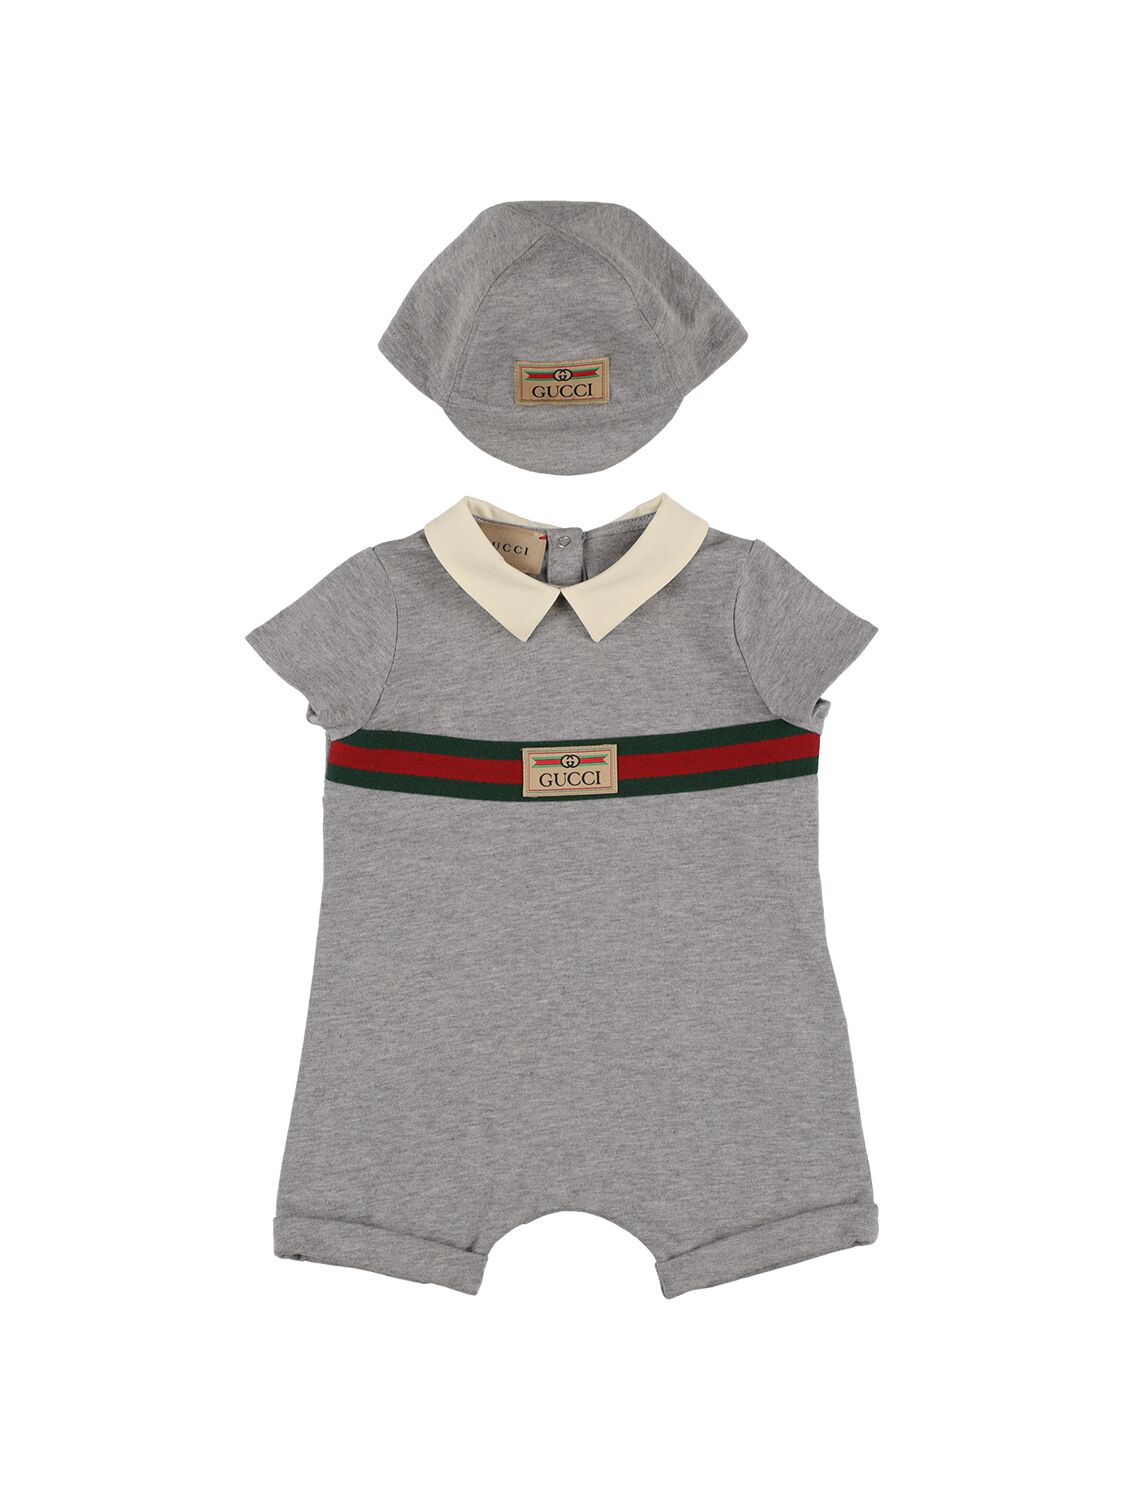 Gucci Babies' Heavy Cotton Romper & Hat In Light Grey